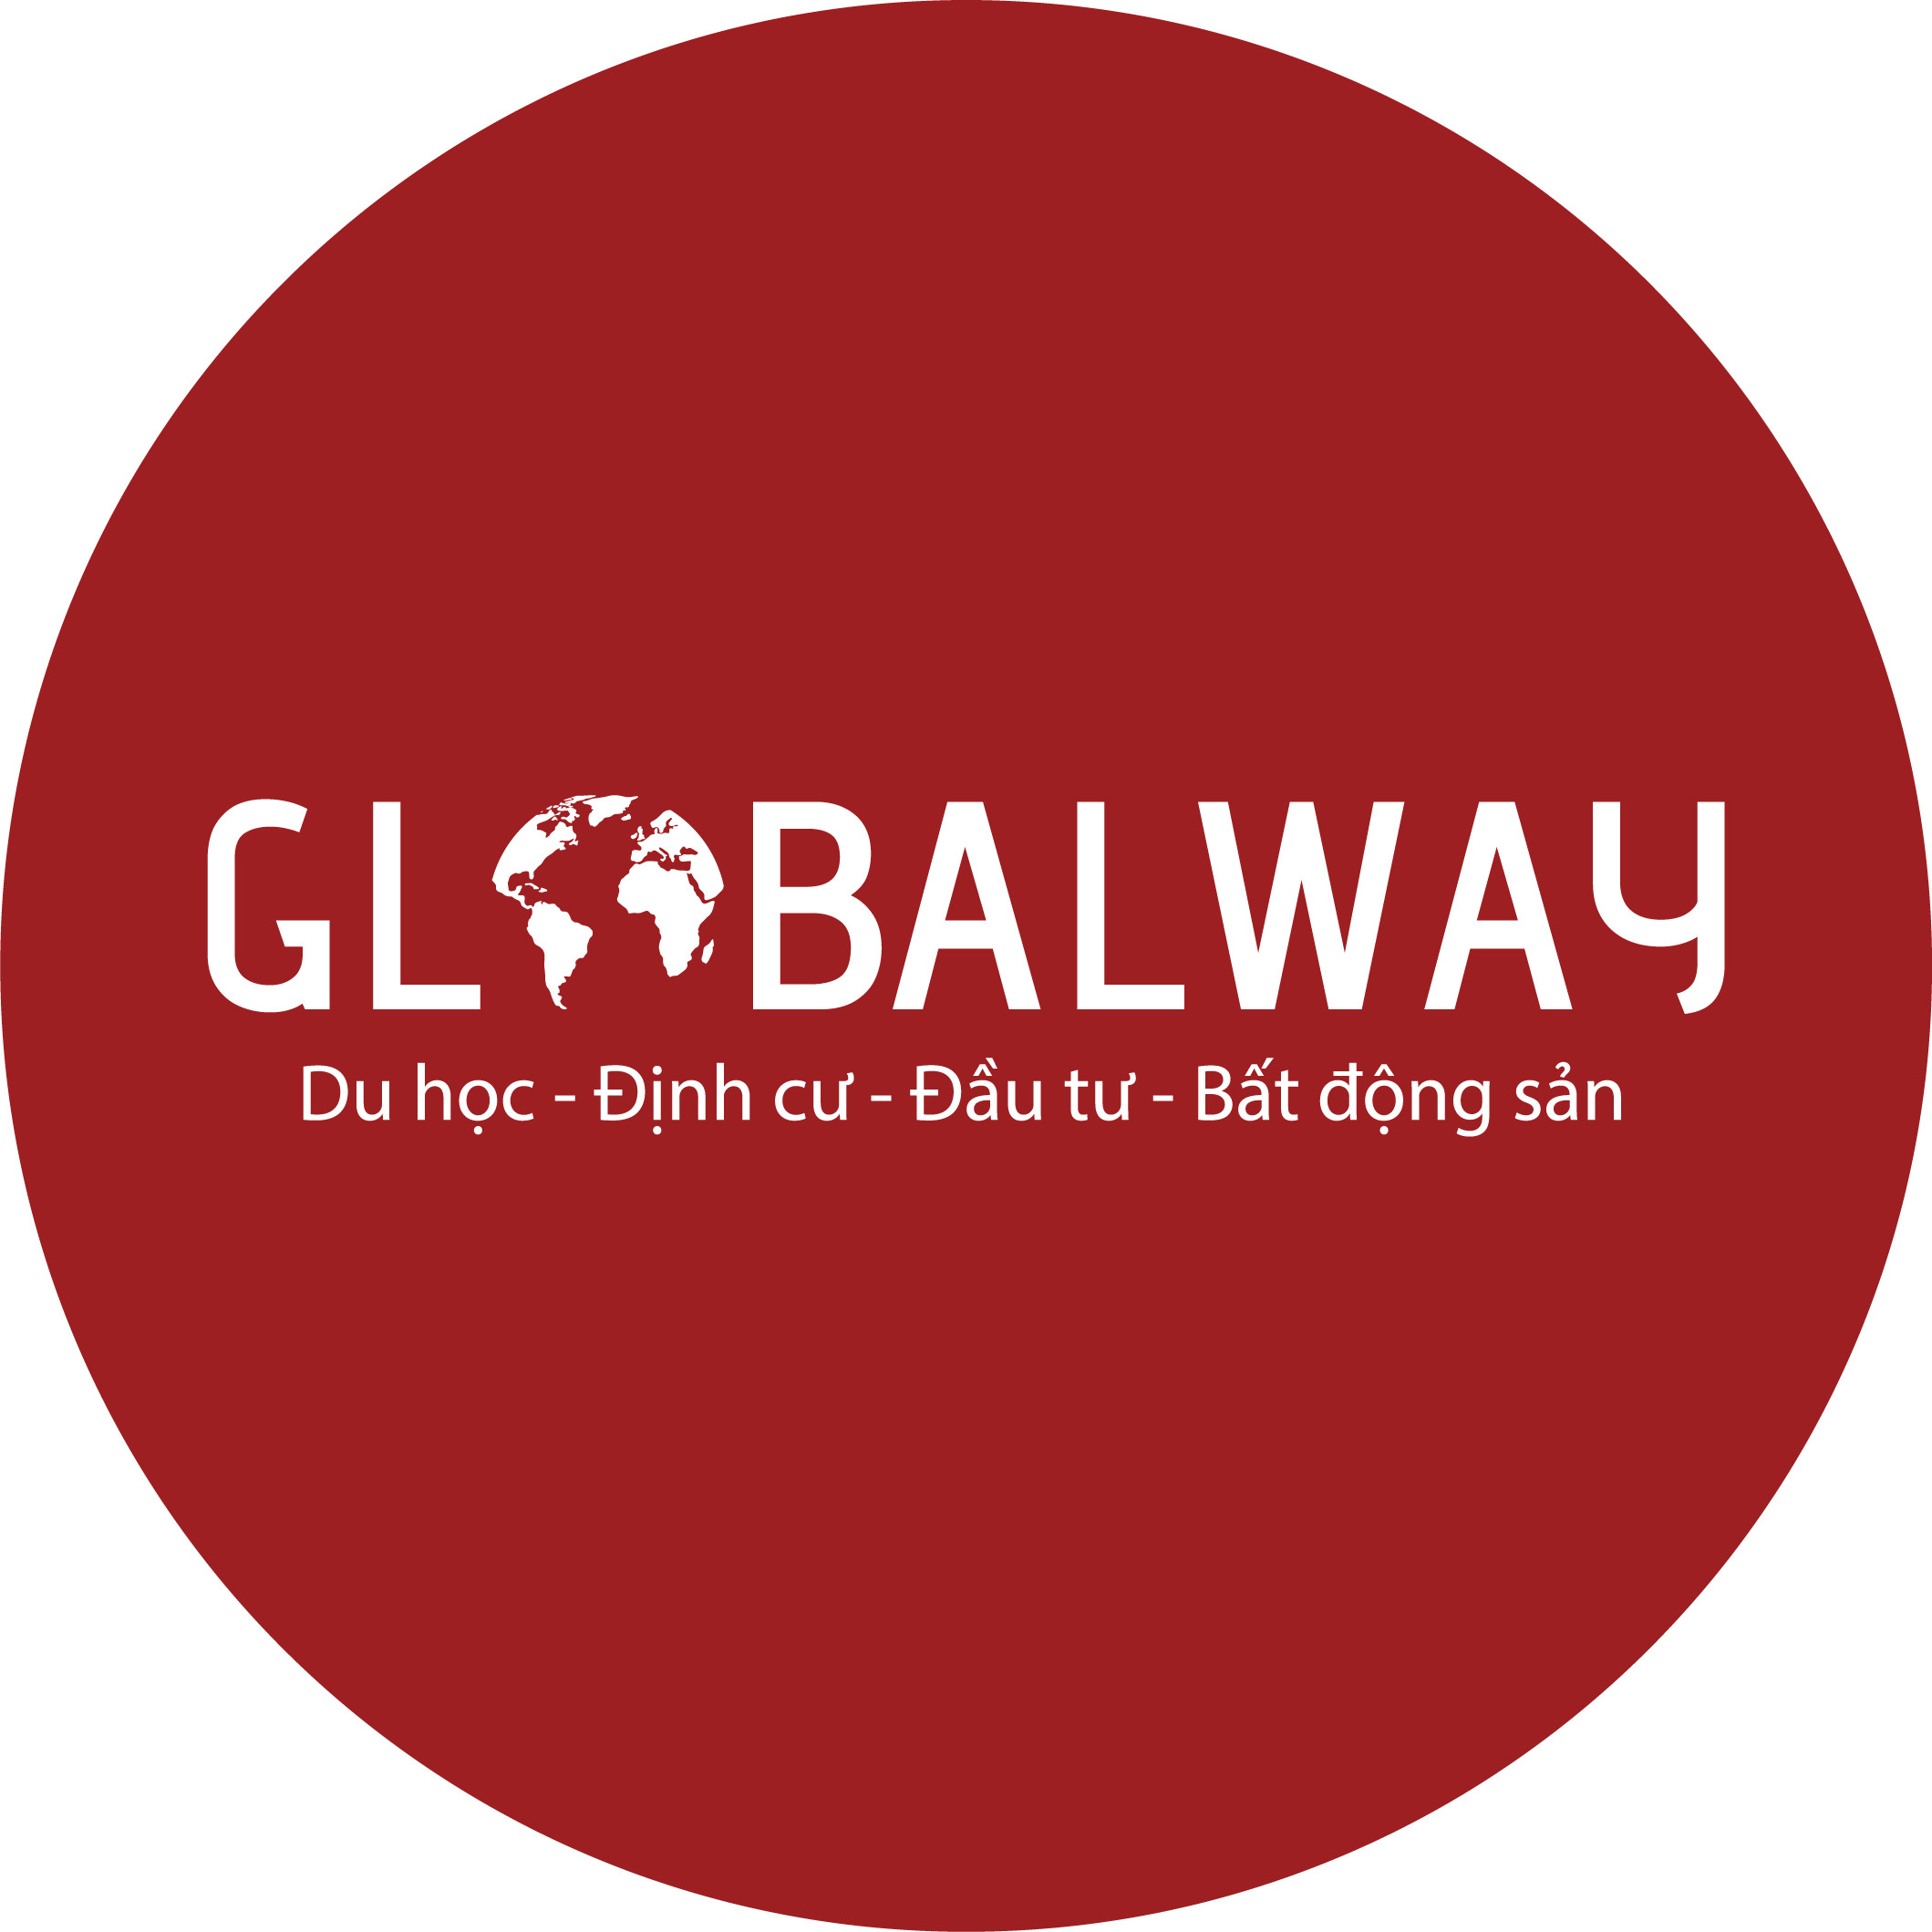 Globalway.vn